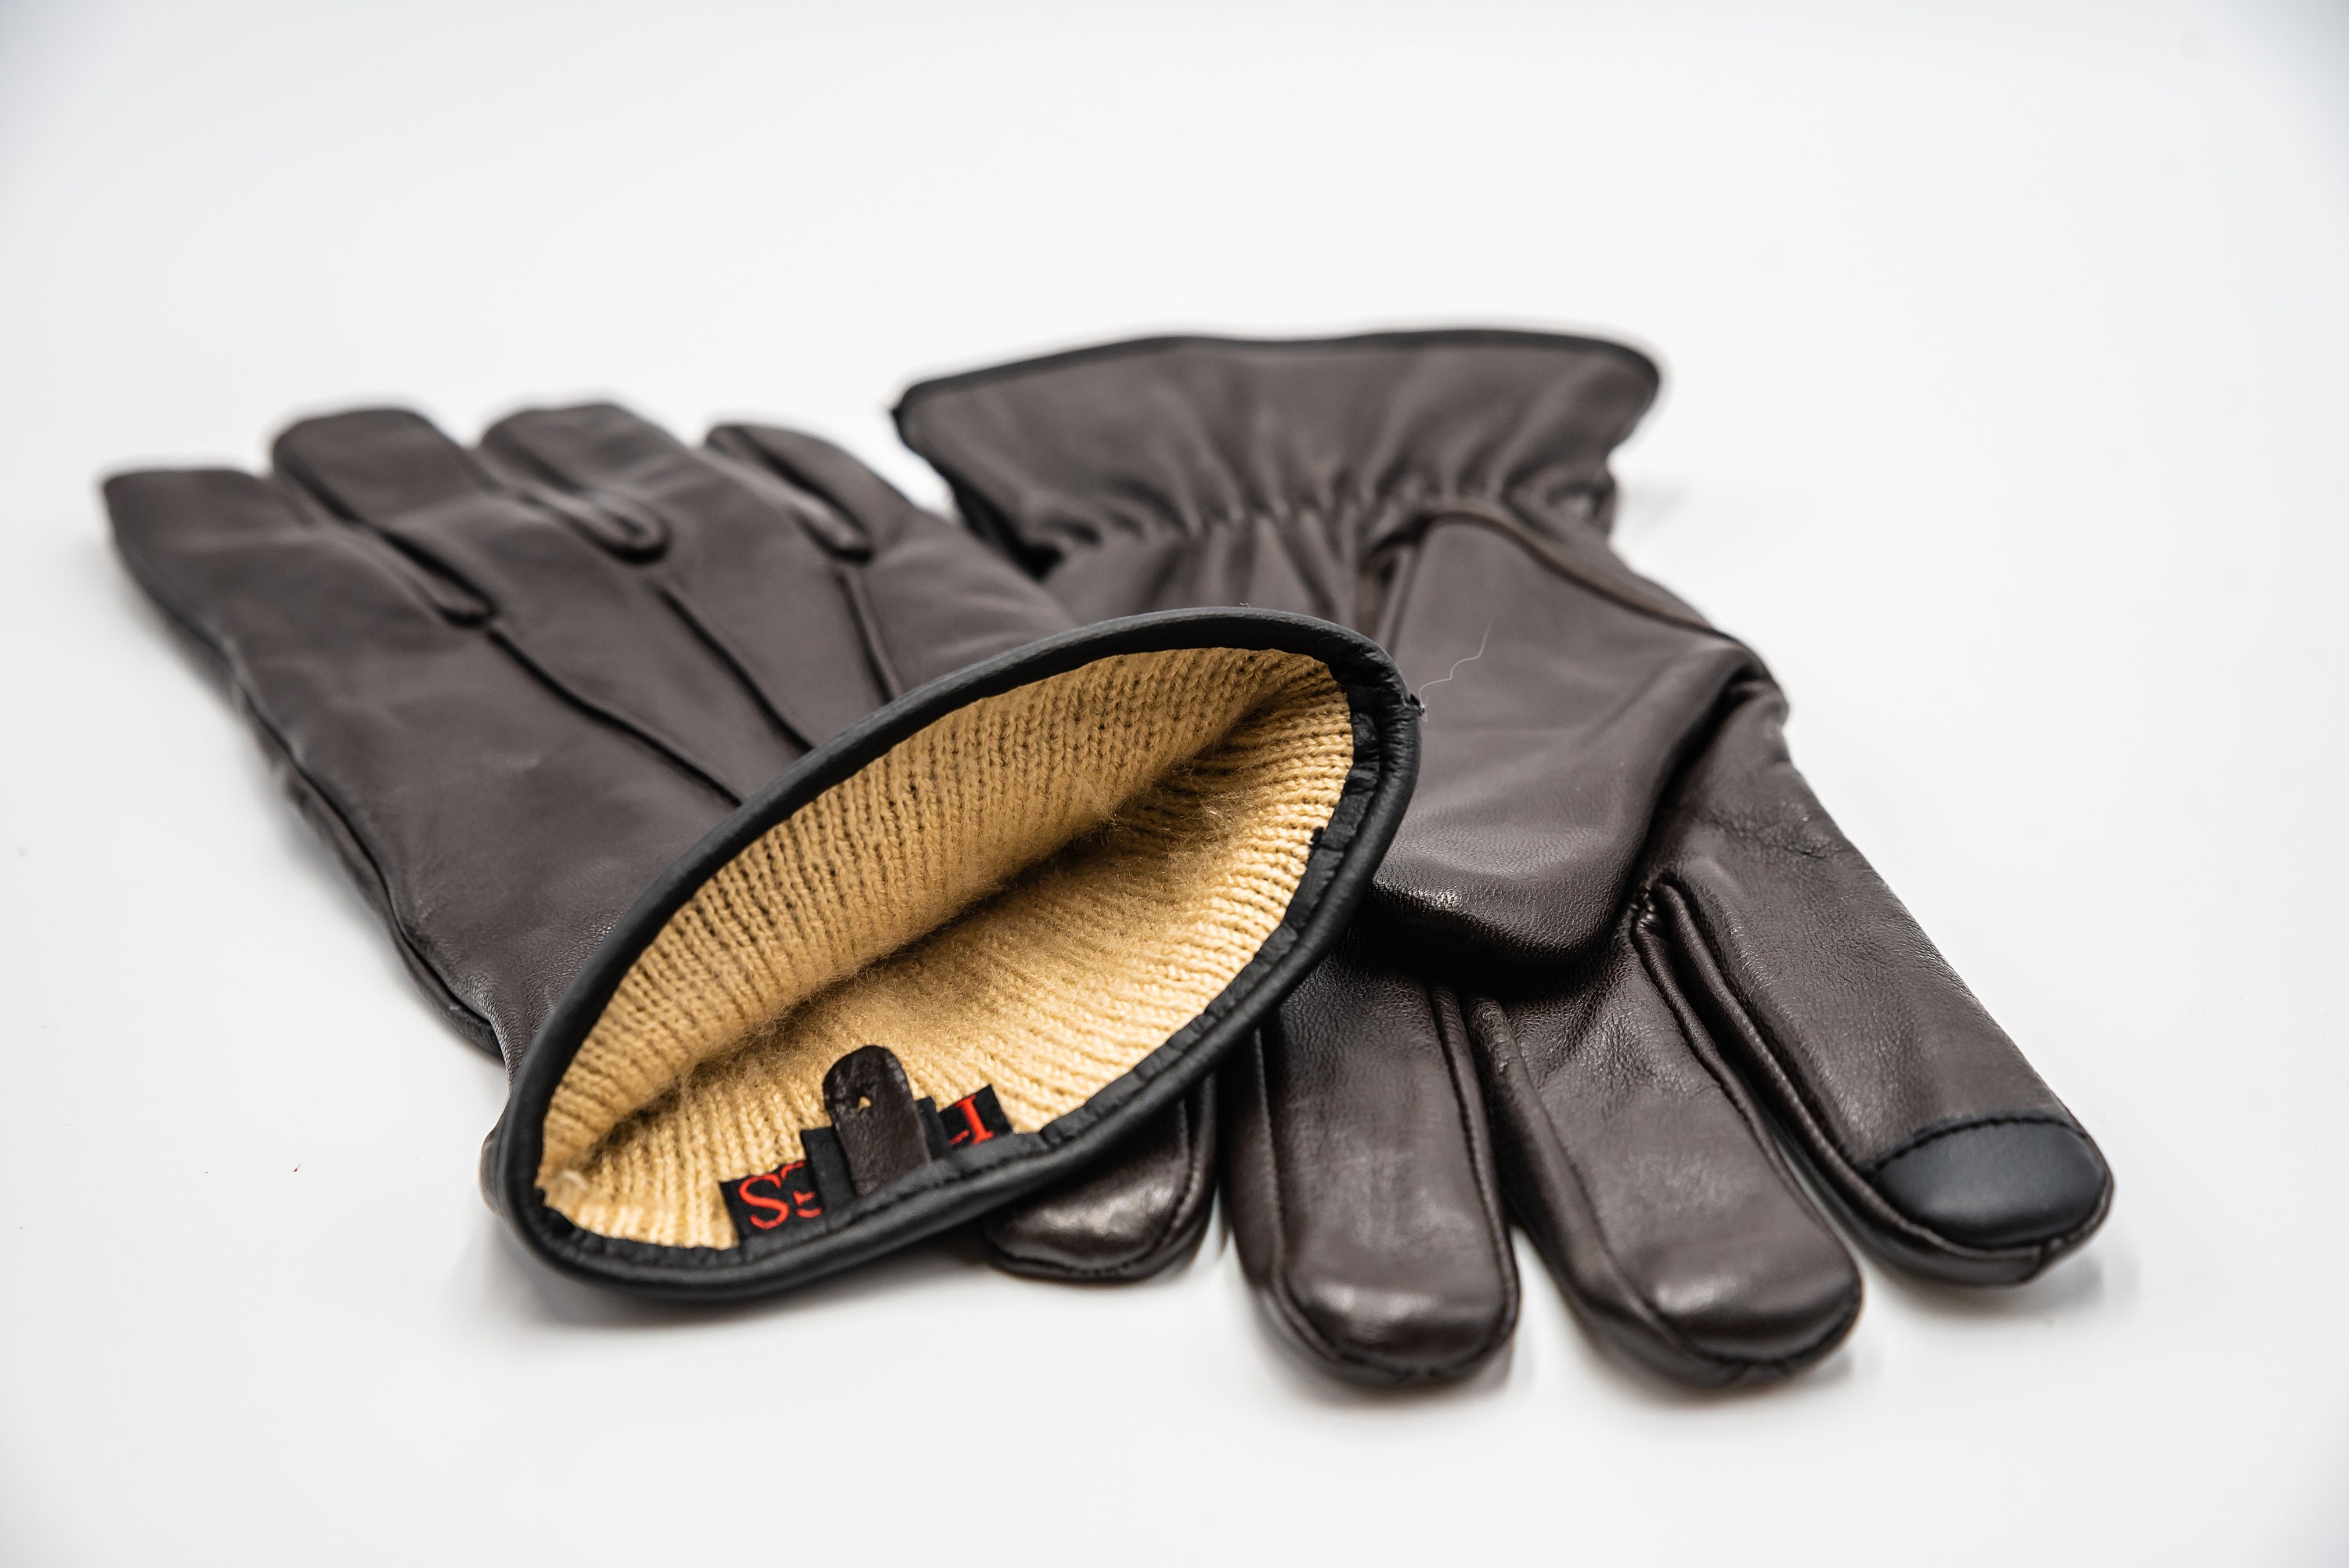 Leather Work Gloves  AUSTIN WHOLESALE LANDSCAPE SUPPLY